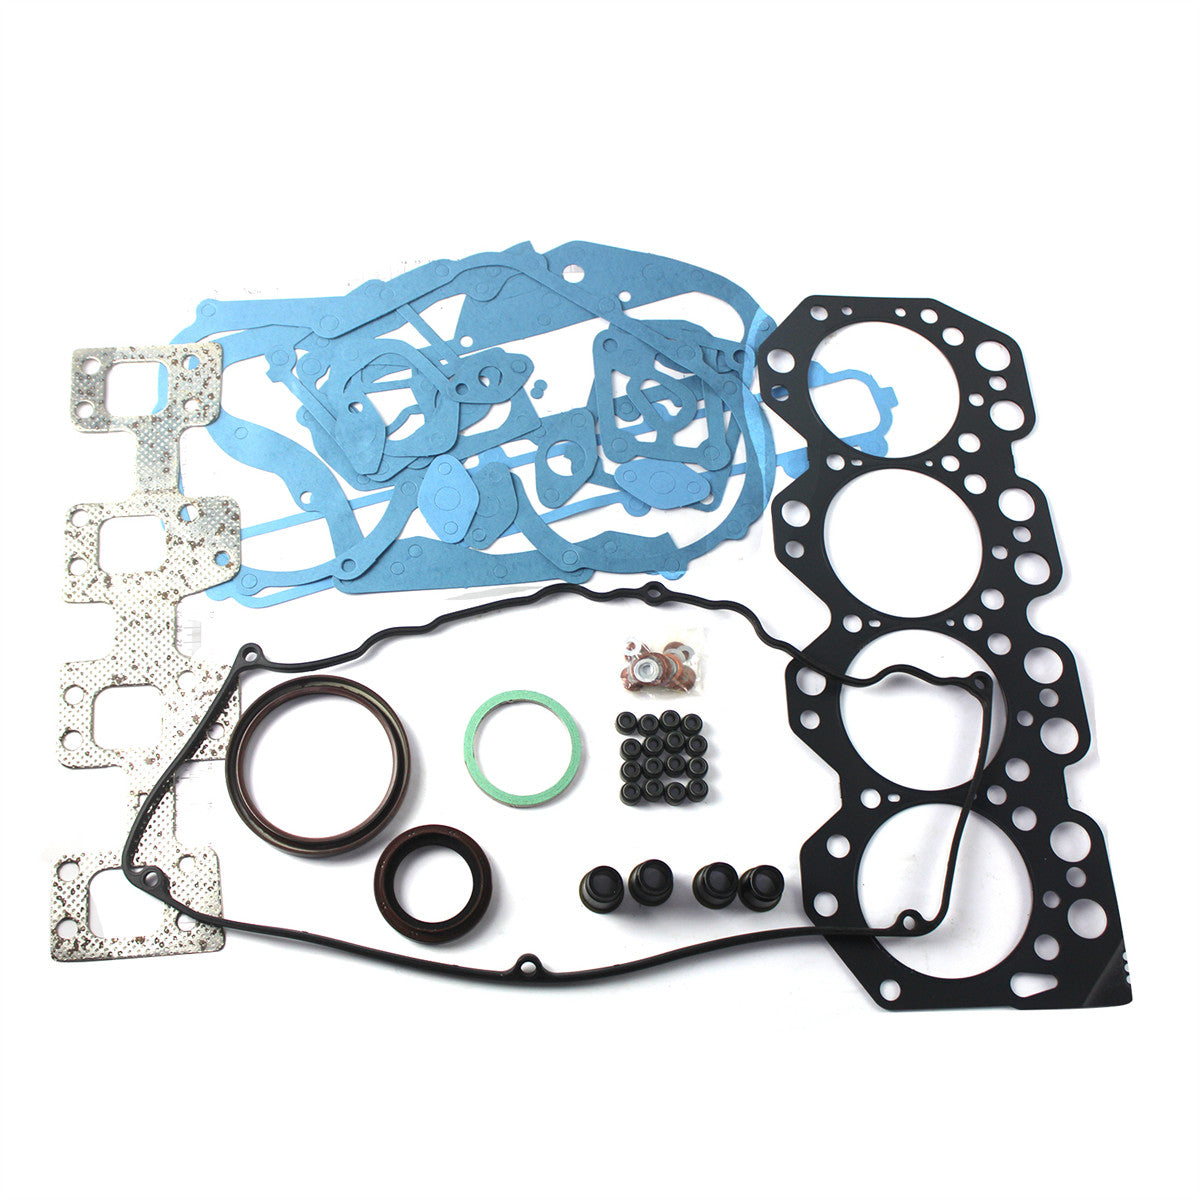 15B 4.1L Disel Engine Gasket Kit for Toyota Coaster BB50 Dyna BU340 - Sinocmp